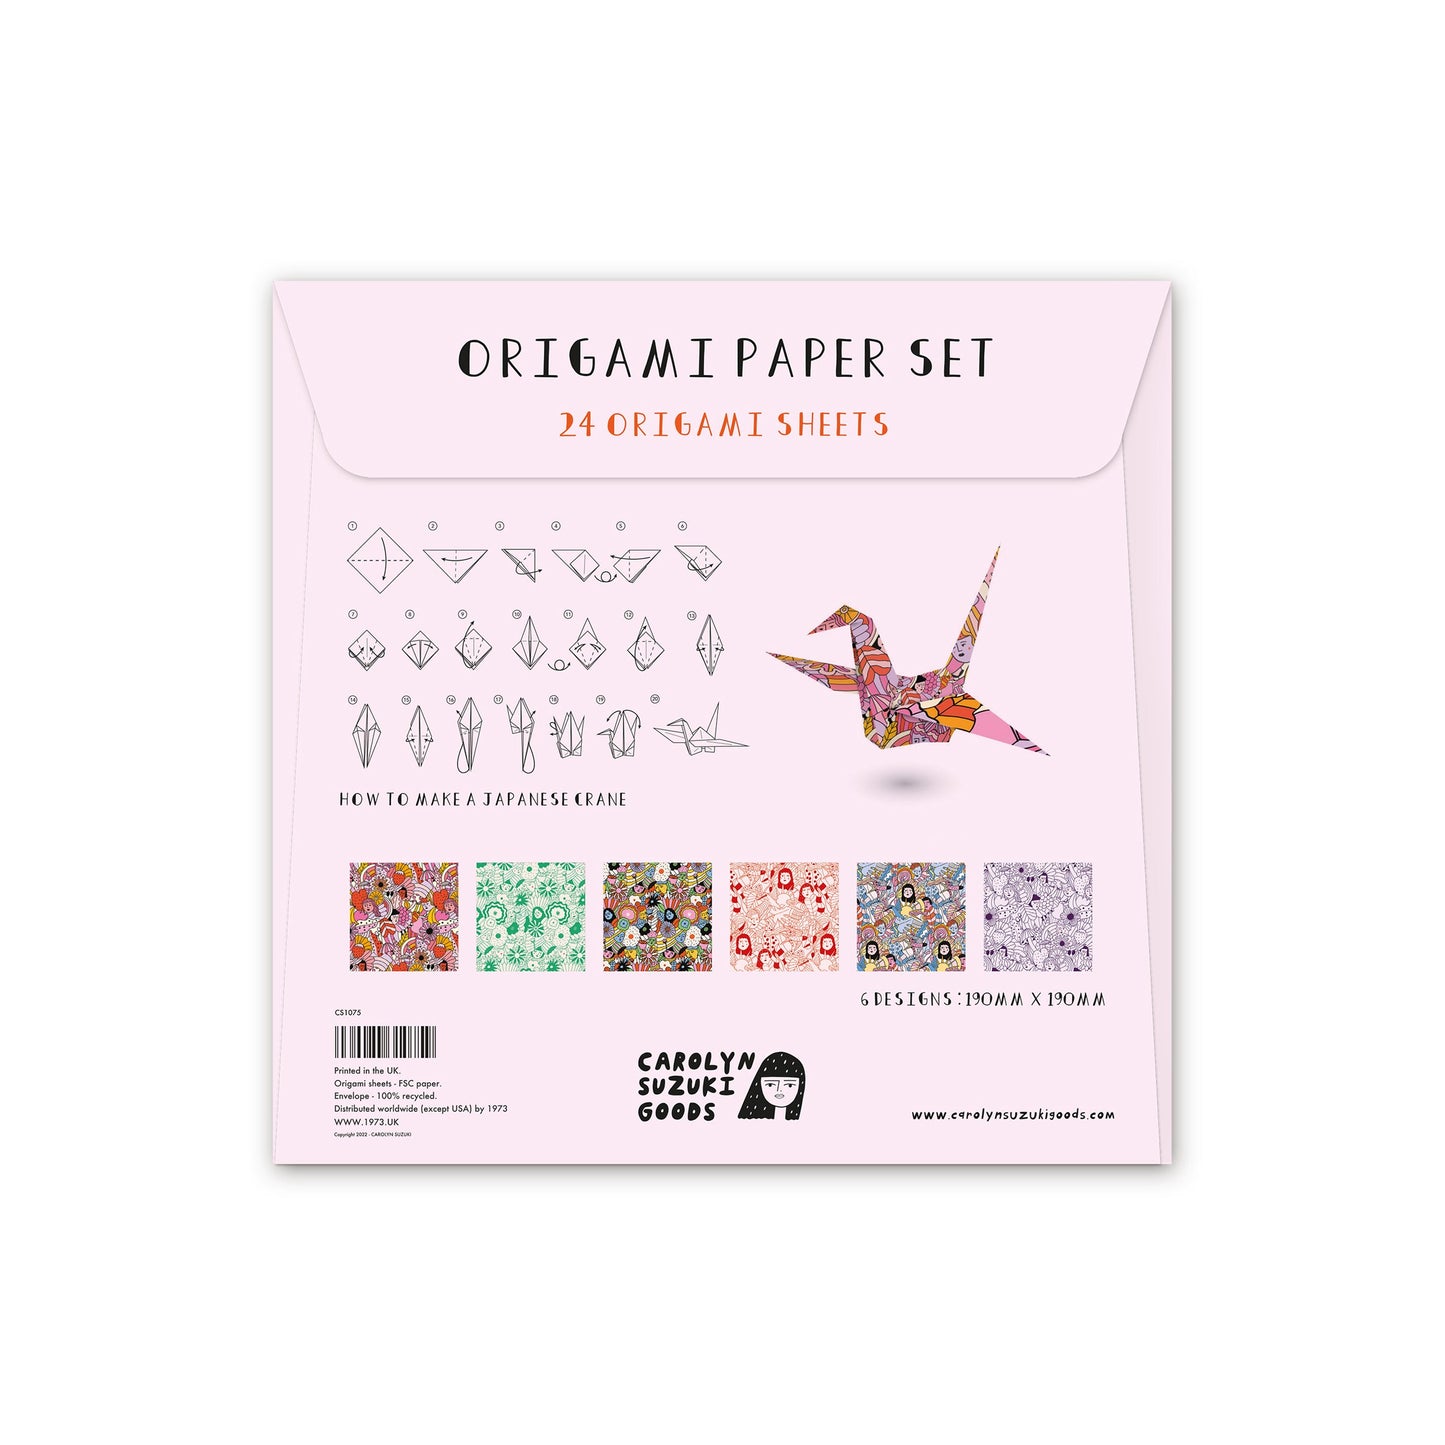 ORIGAMI SET - Origami Set